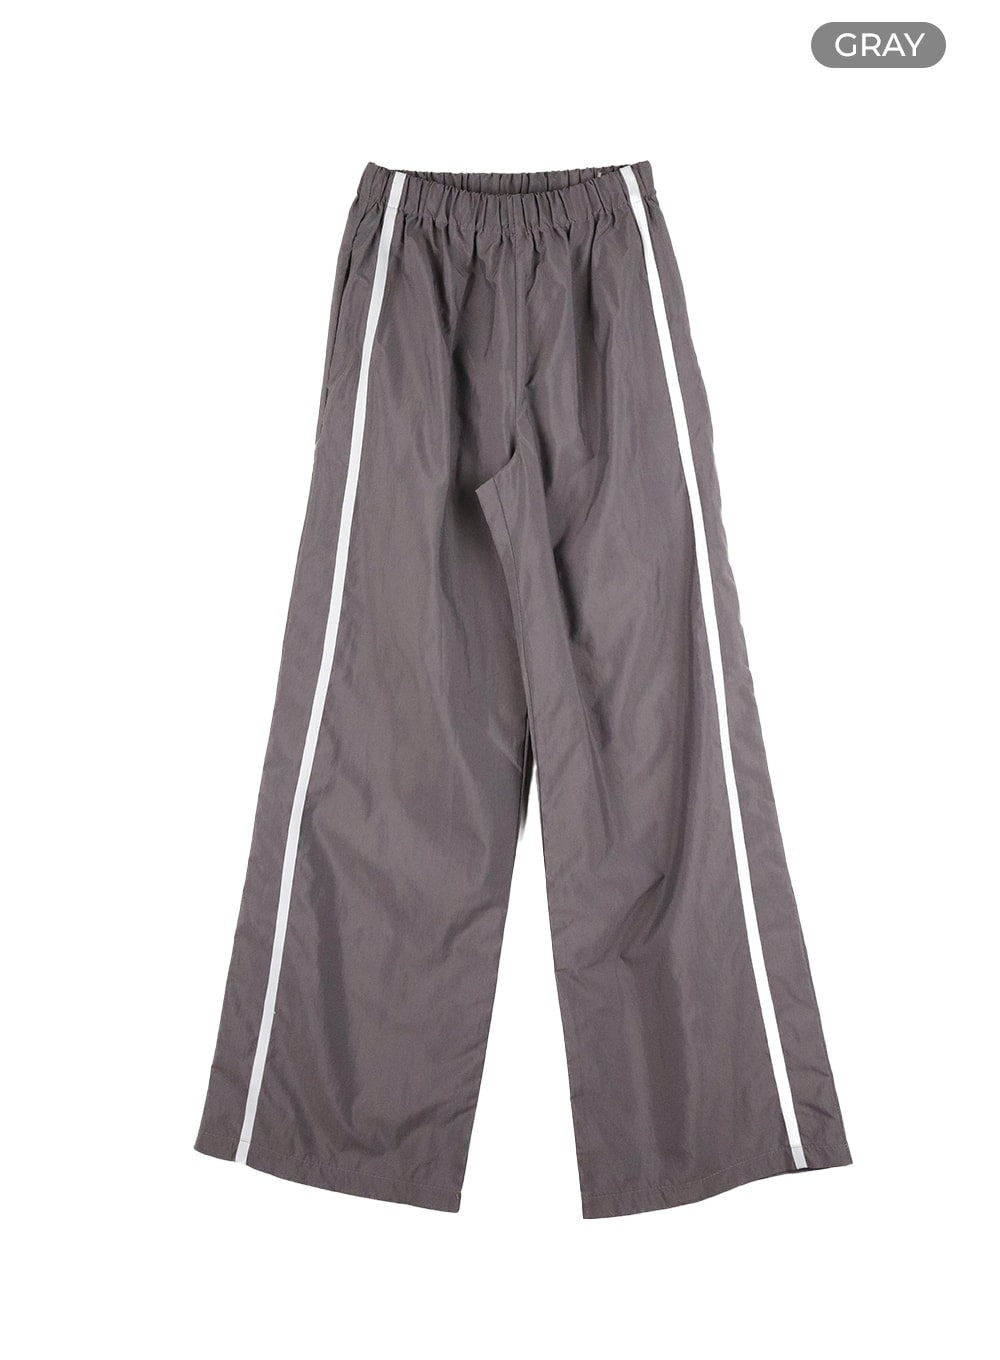 Chamois Cloth Pant - Model F2 Standard Fit Plain Front in Black by Hansen's  Khakis - Hansen's Clothing